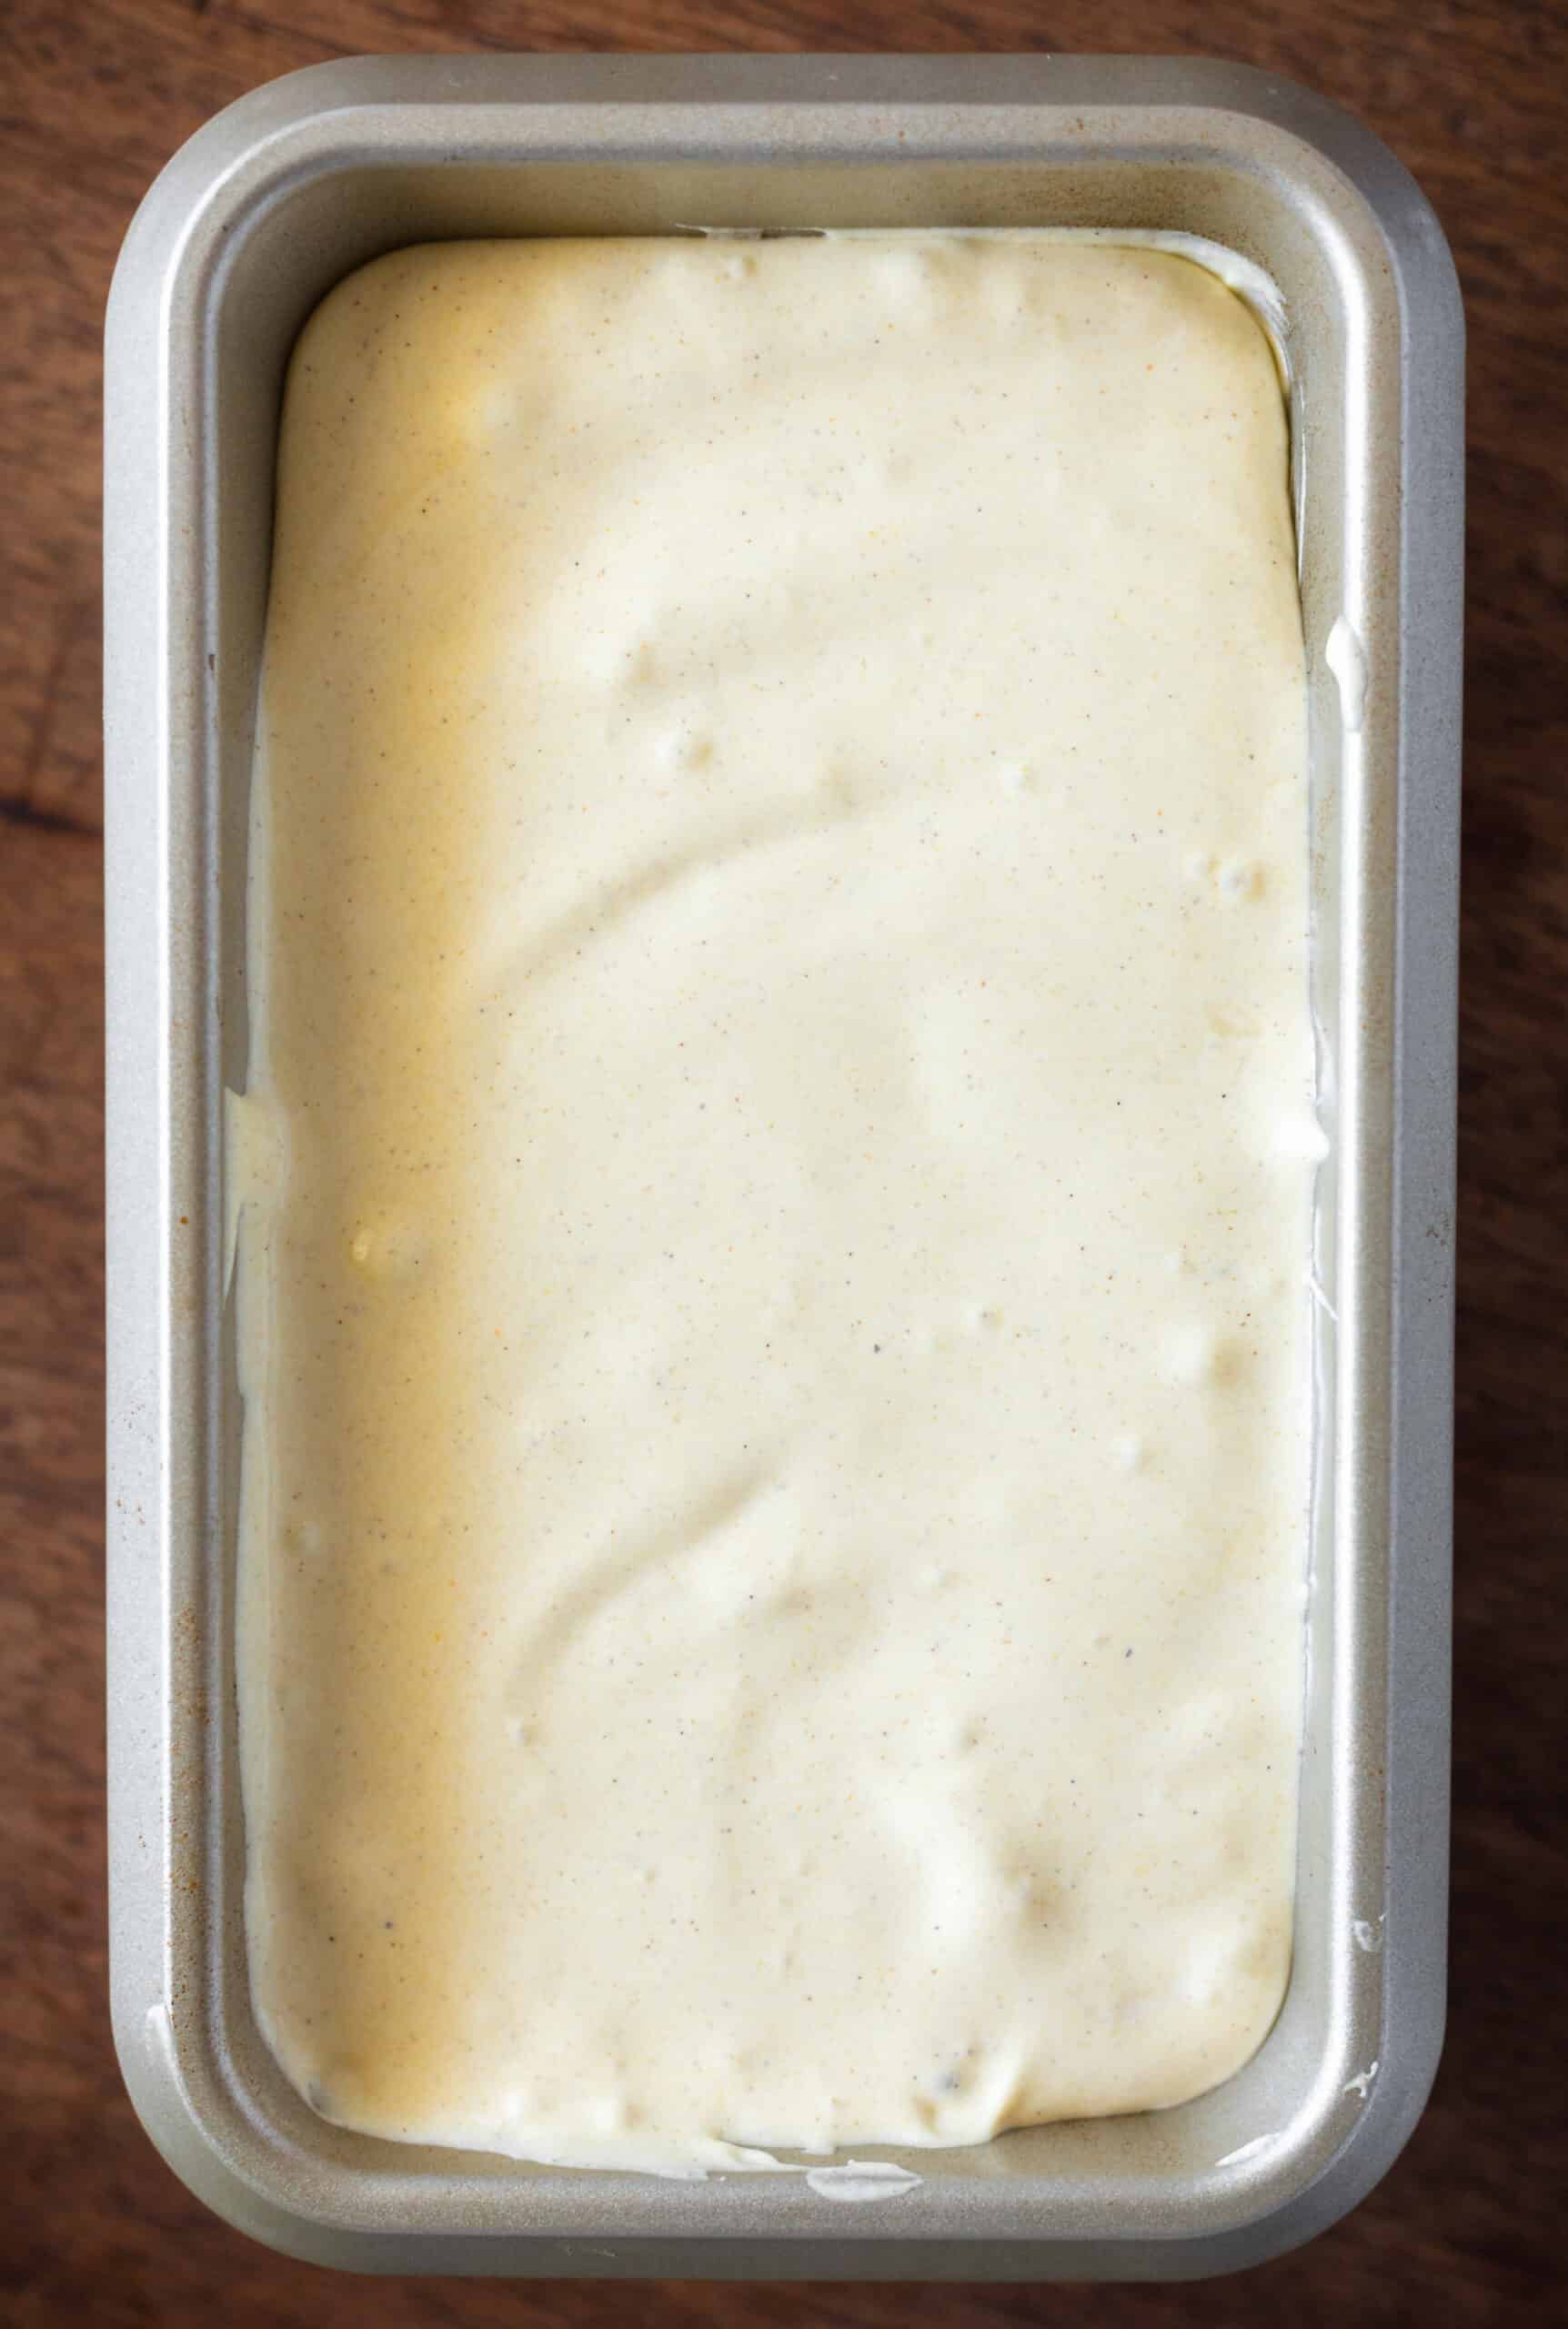 ice cream layer in freezer safe container